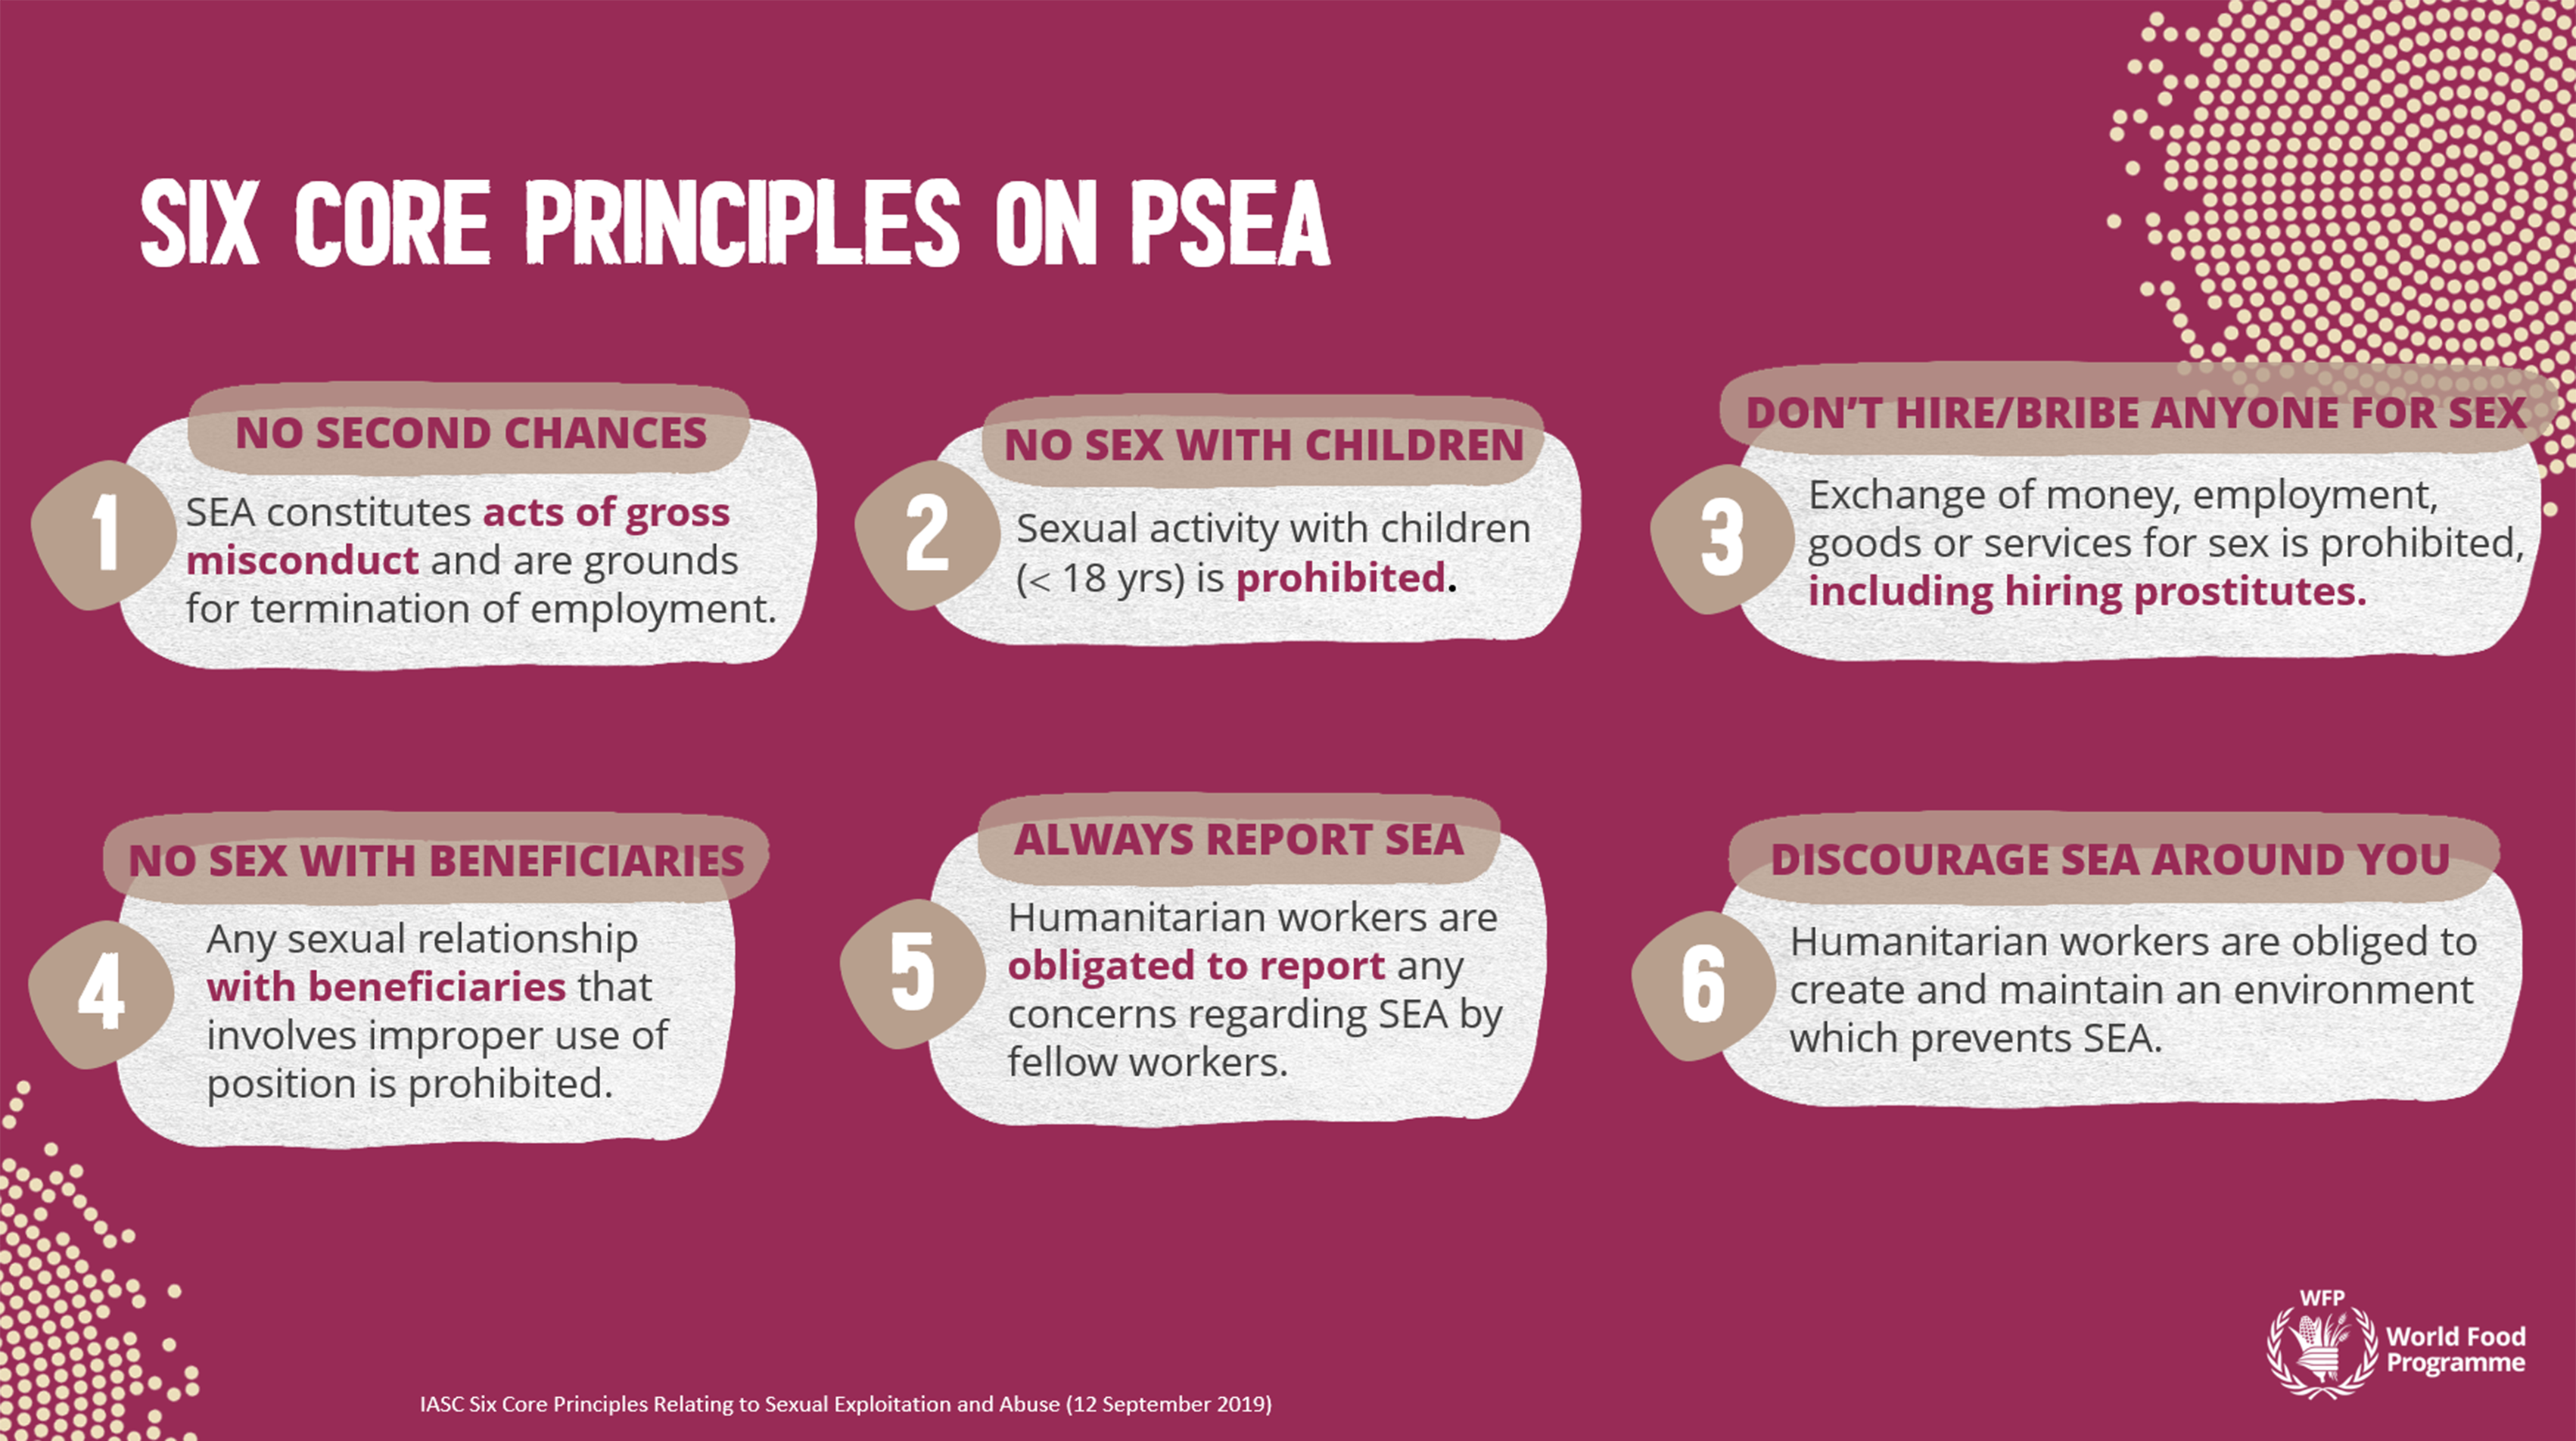 Six core principles of PSEA